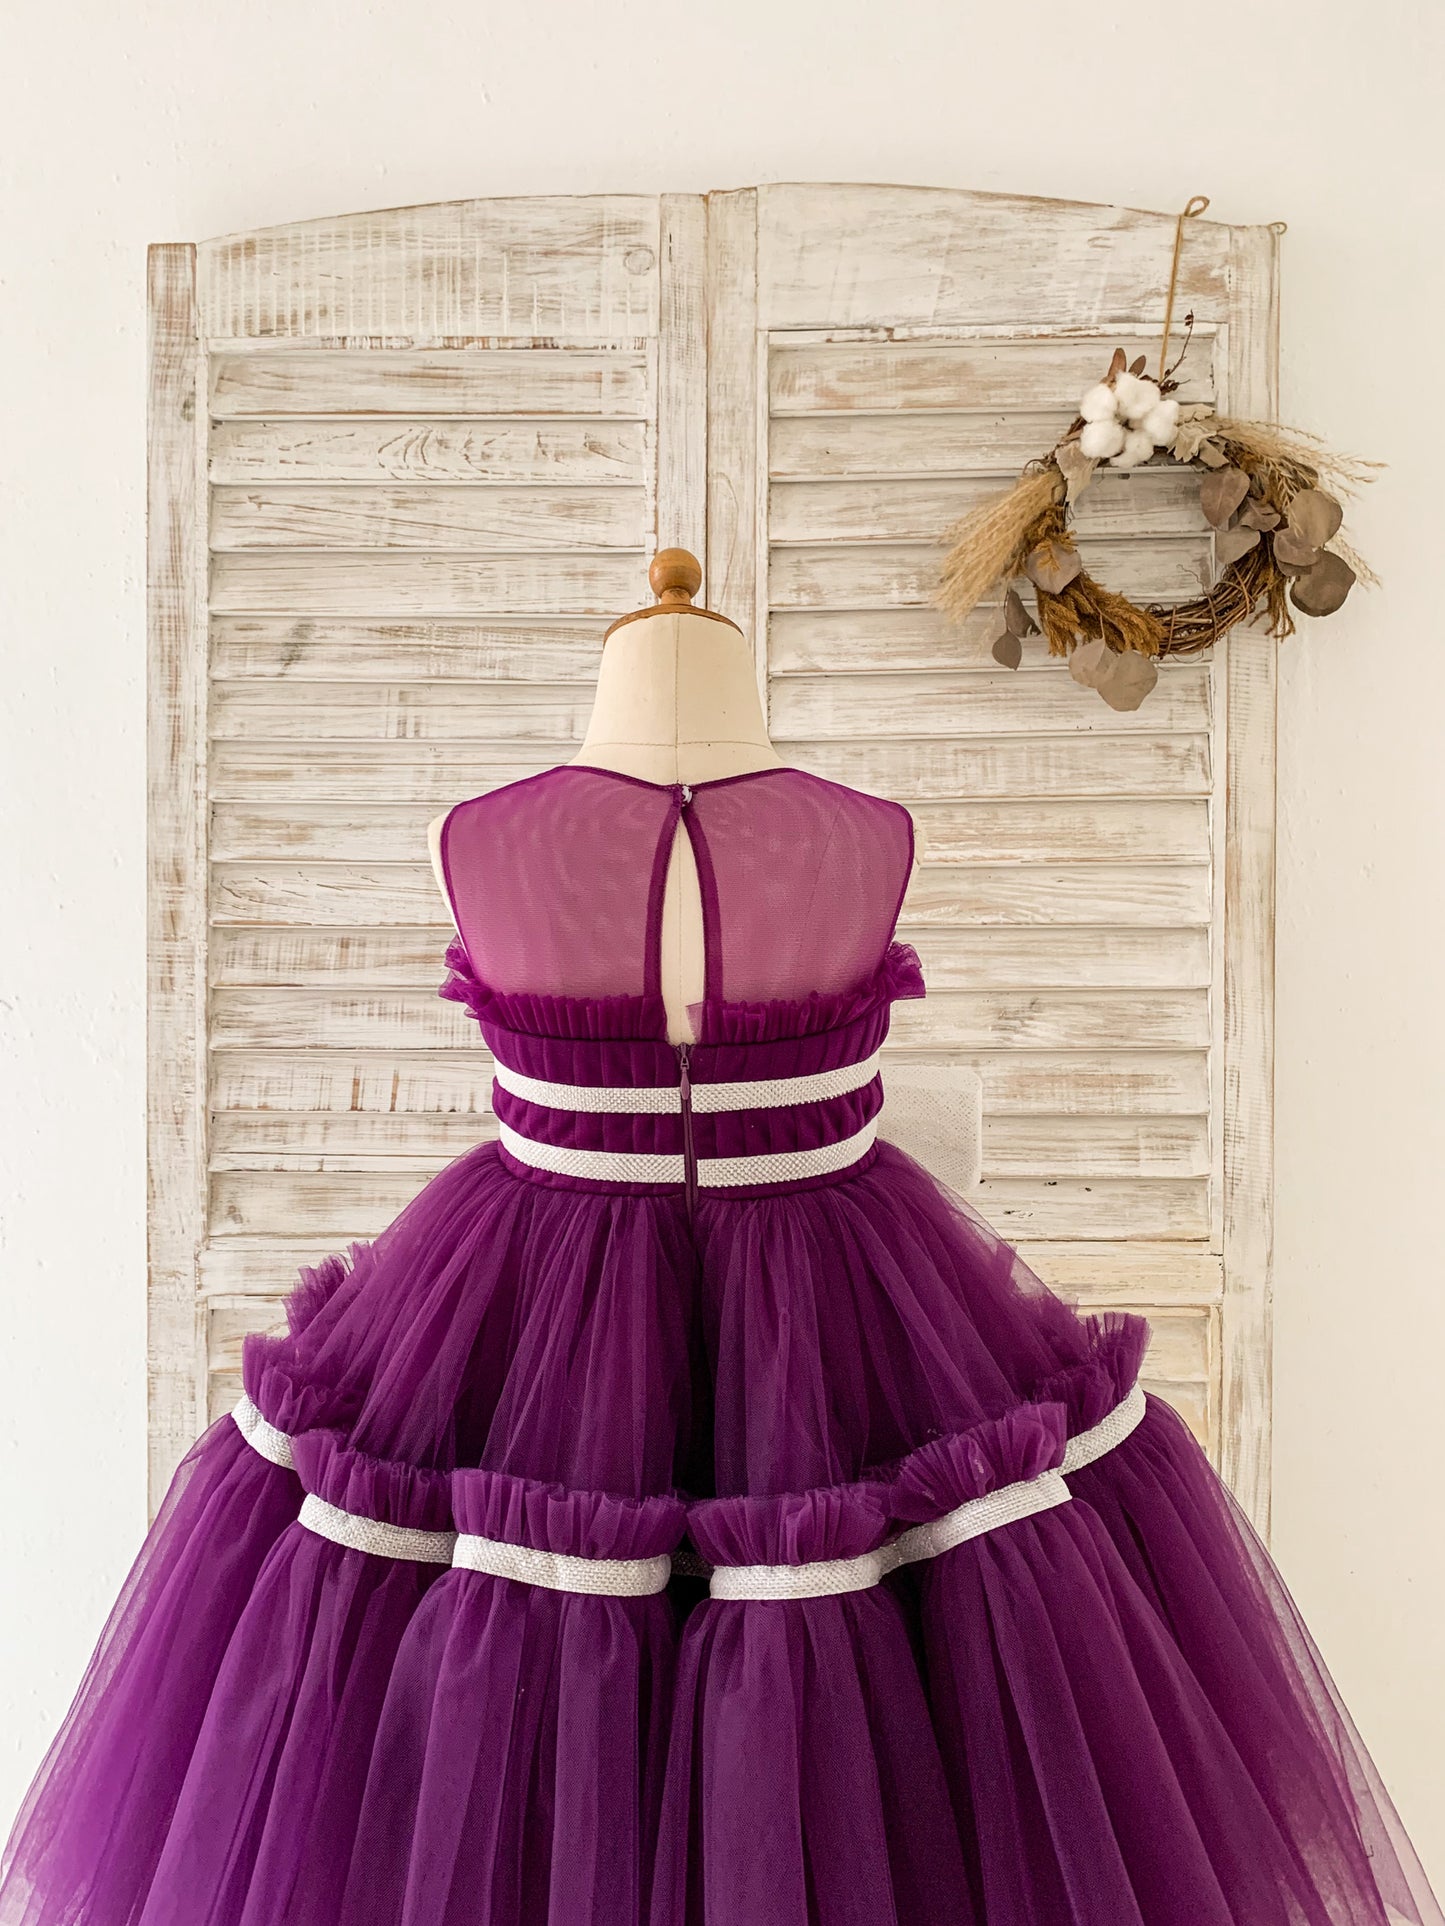 Princess Sheer Neck Pleated Purple Tulle Wedding Flower Girl Dress, Bow